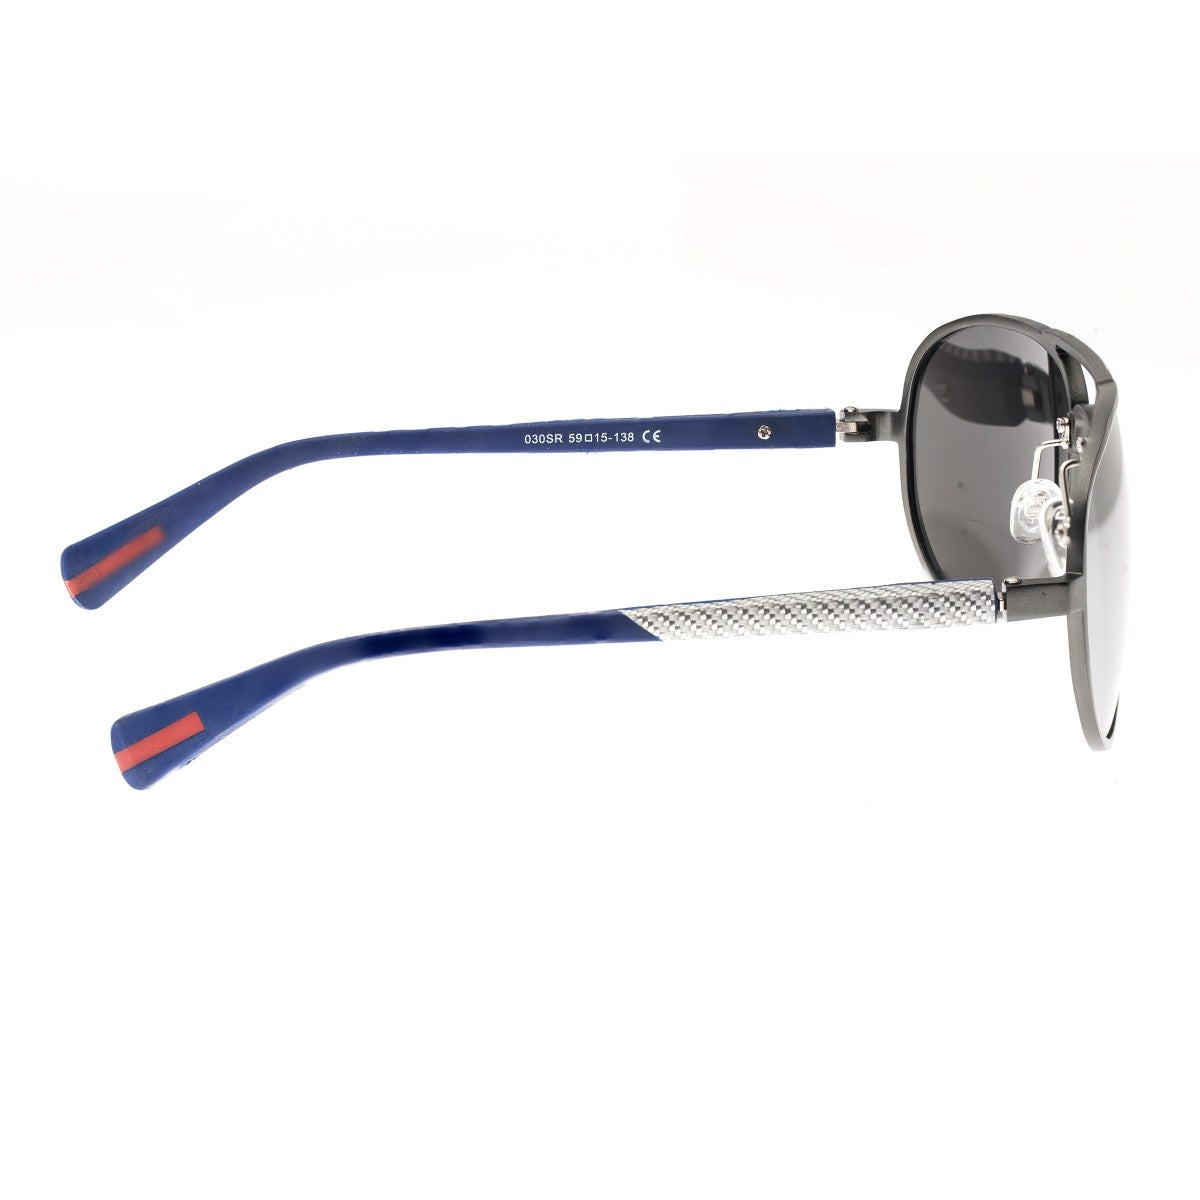 Breed Dorado Titanium Polarized Sunglasses - Gunmetal/Black - BSG030SR